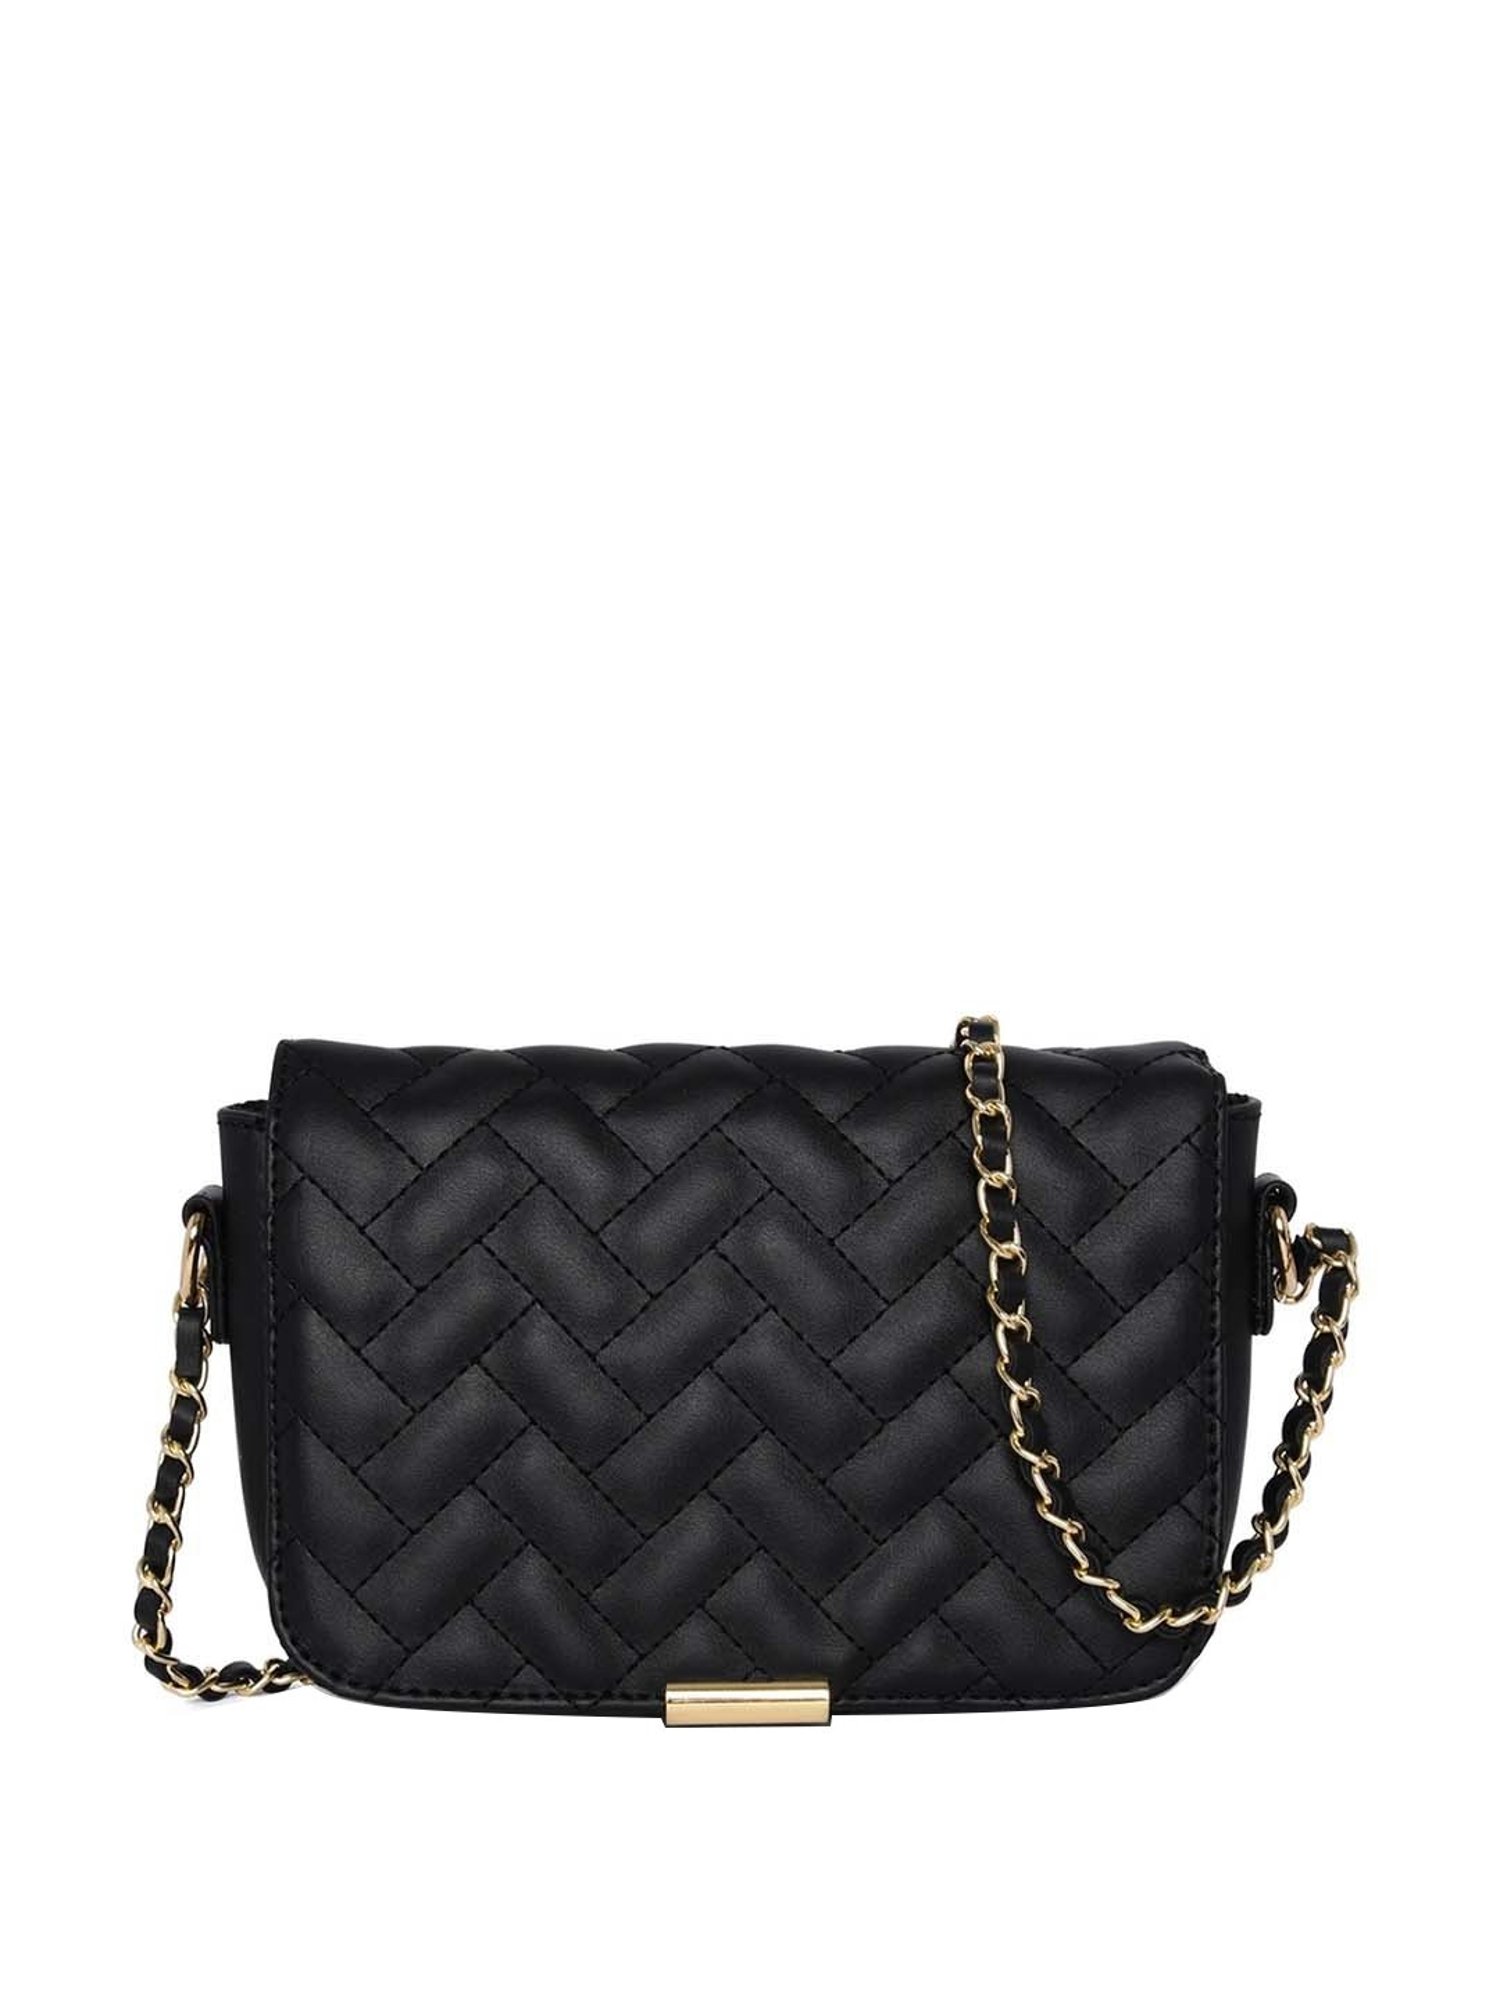 bebe Chelsea Crossbody Warm Taupe Purse Handbag DESIGNER BRAND Xbody for  sale online | eBay